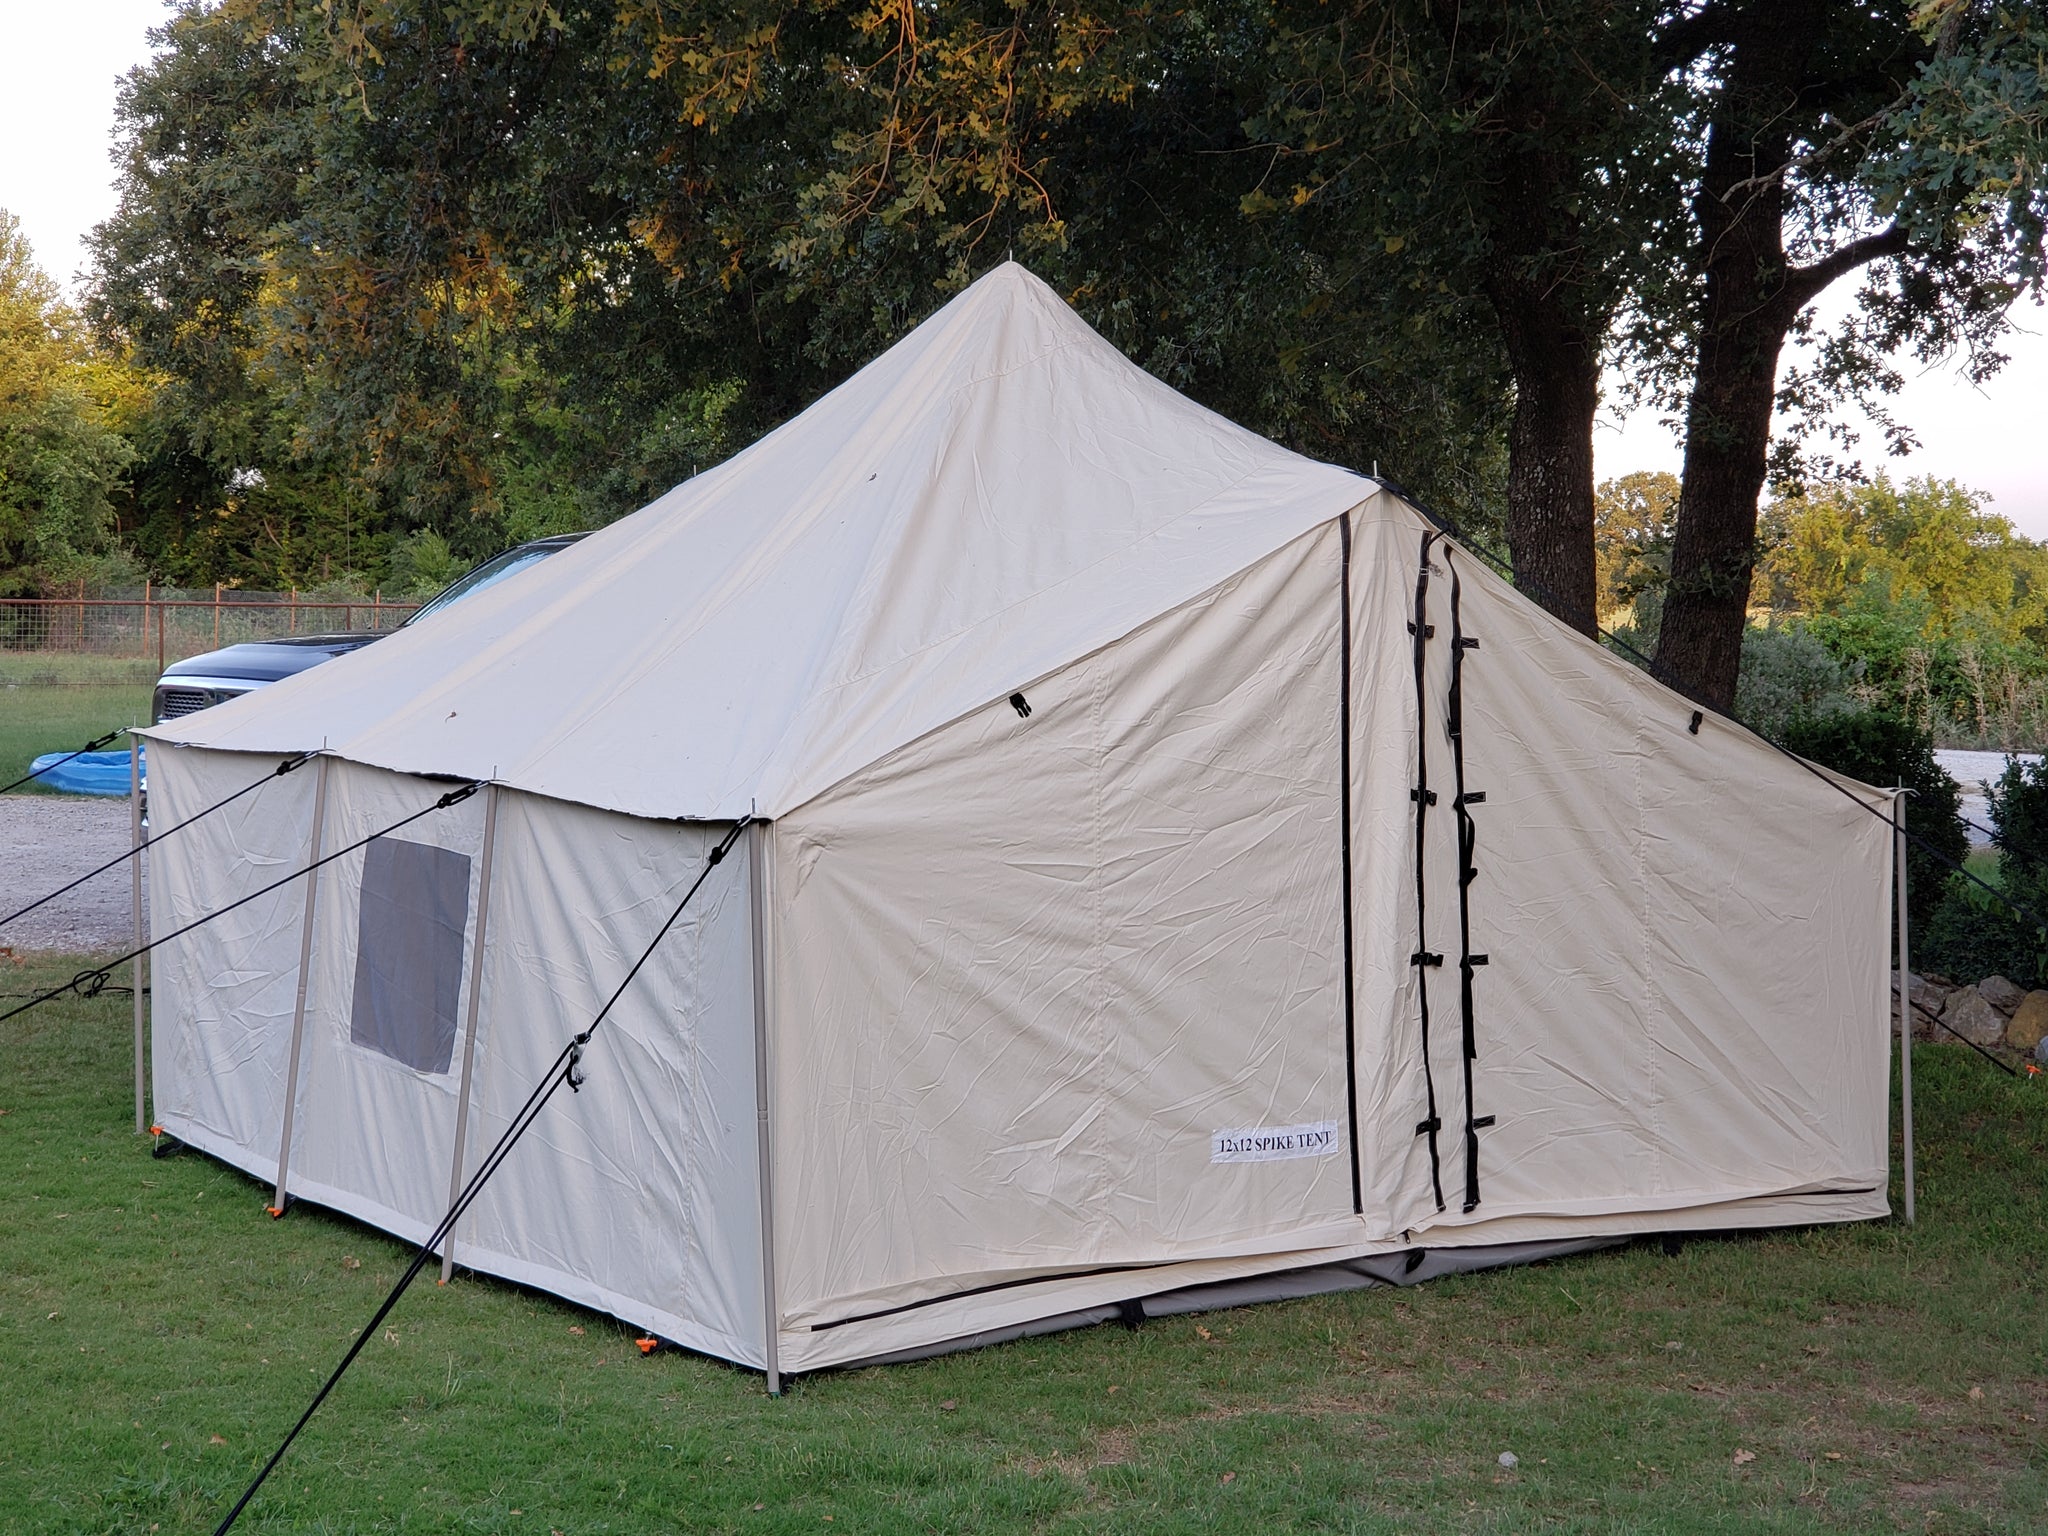 Selkirk Spike Tent - Tent, Frame, Floor, & Fly